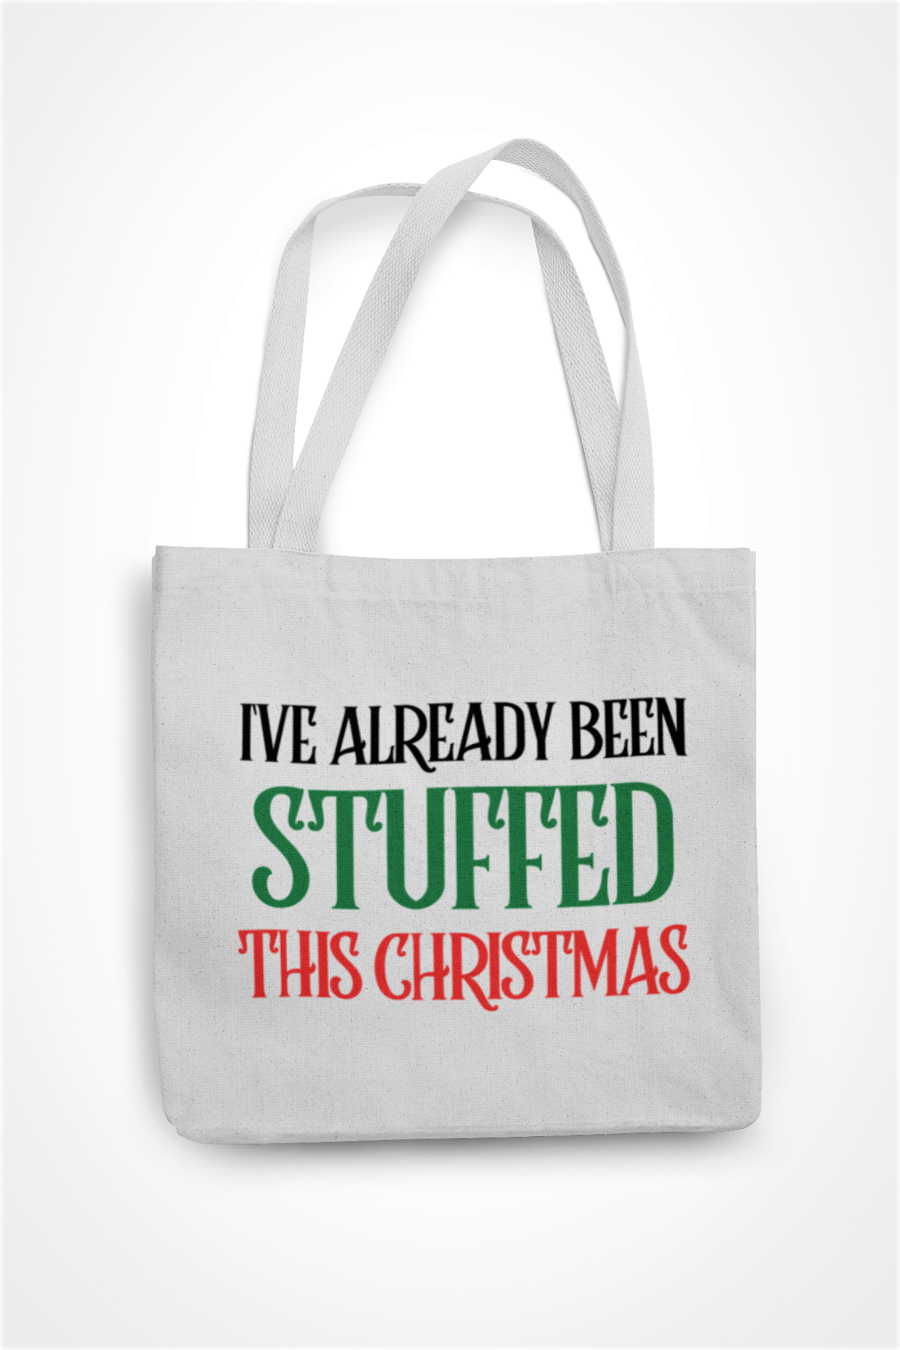 I've Already Been Stuffed This Christmas Tote Bag - Shopper Bag xmas Gift